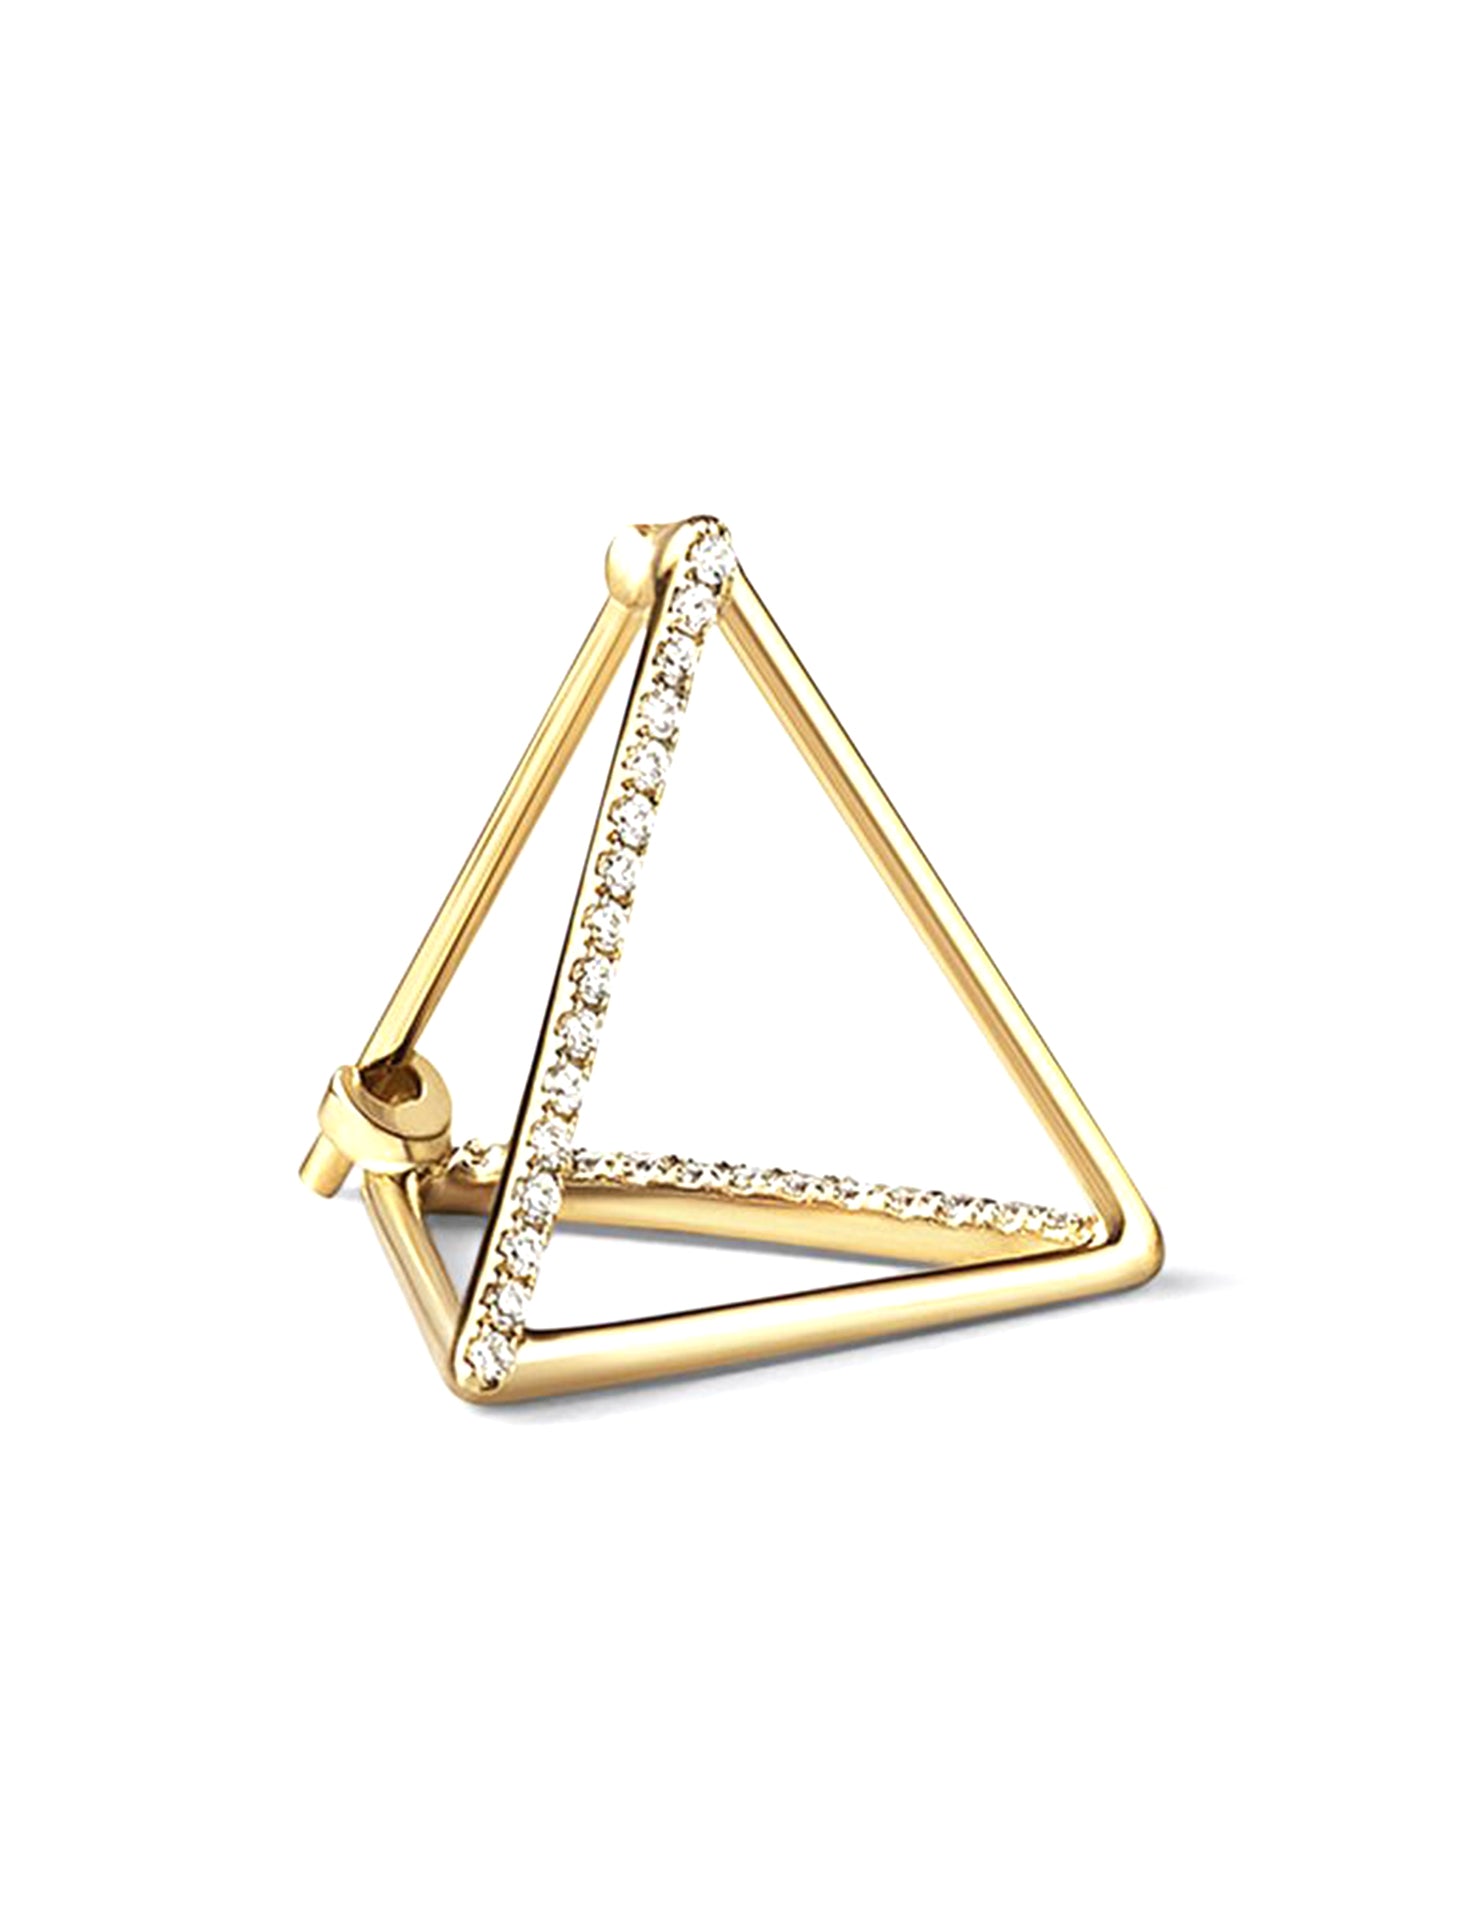 3D Triangle, 18K Yellow Gold + Diamond Pavé Earring, Large